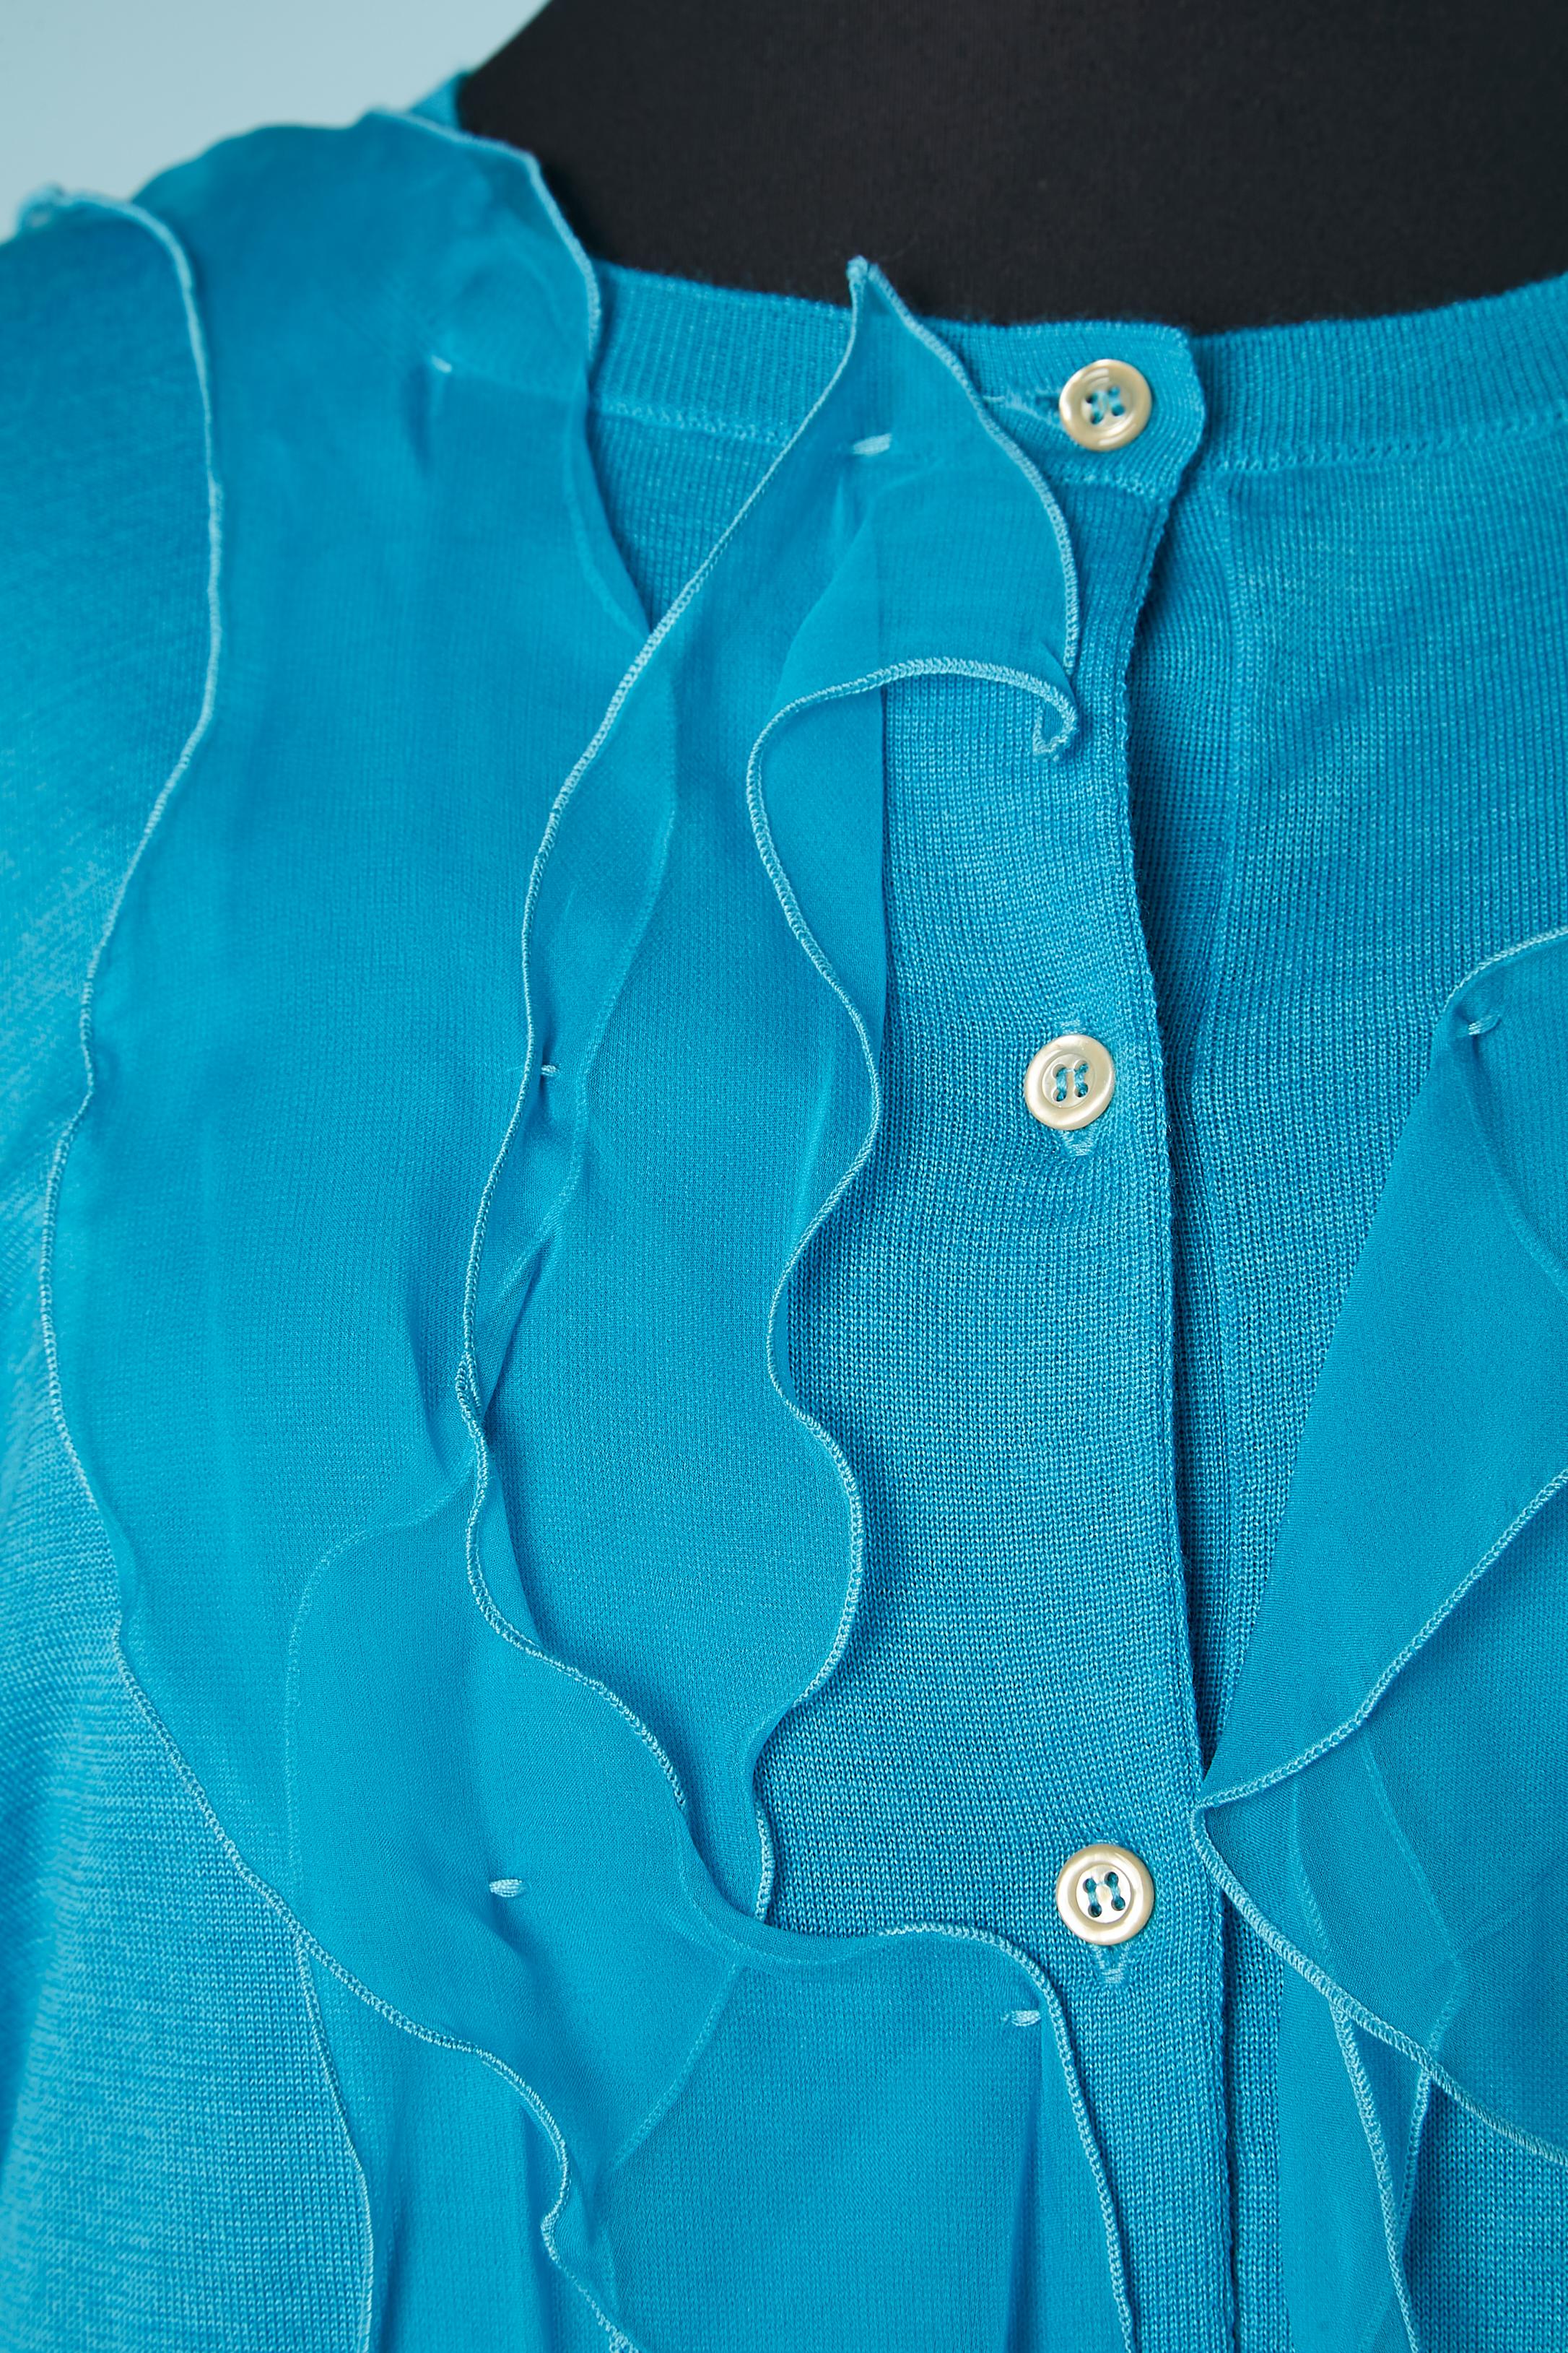 Blue cashmere cardigan and blue silk chiffon dress ensemble. Cardigan composition: 70% cashmere, 30% silk. 
Dress: 100% silk chiffon. Silk chiffon ribbons raw-cut appliqué on the dress. 
SIZE cardigan: 42 It/ 38 Fr/ 8 Us 
Size dress: 46 It / 42 Fr /